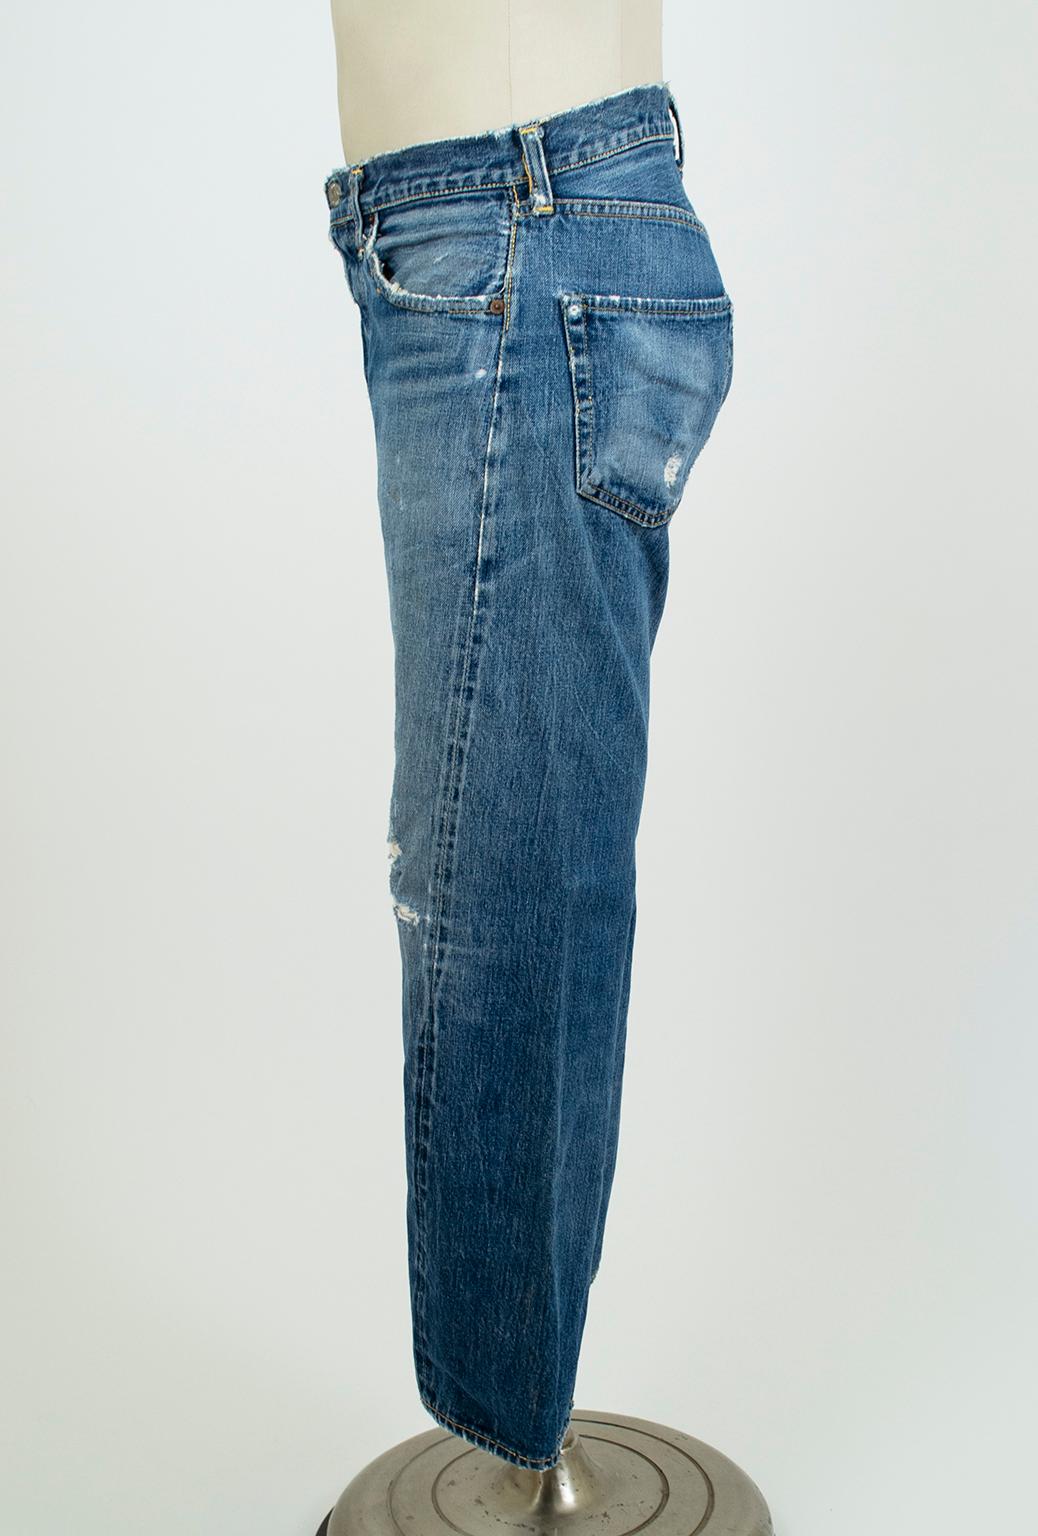 Blue Men's Levi Strauss 501XX Denim Jeans with Hidden Rivets – size 32 x 38, 1962-64